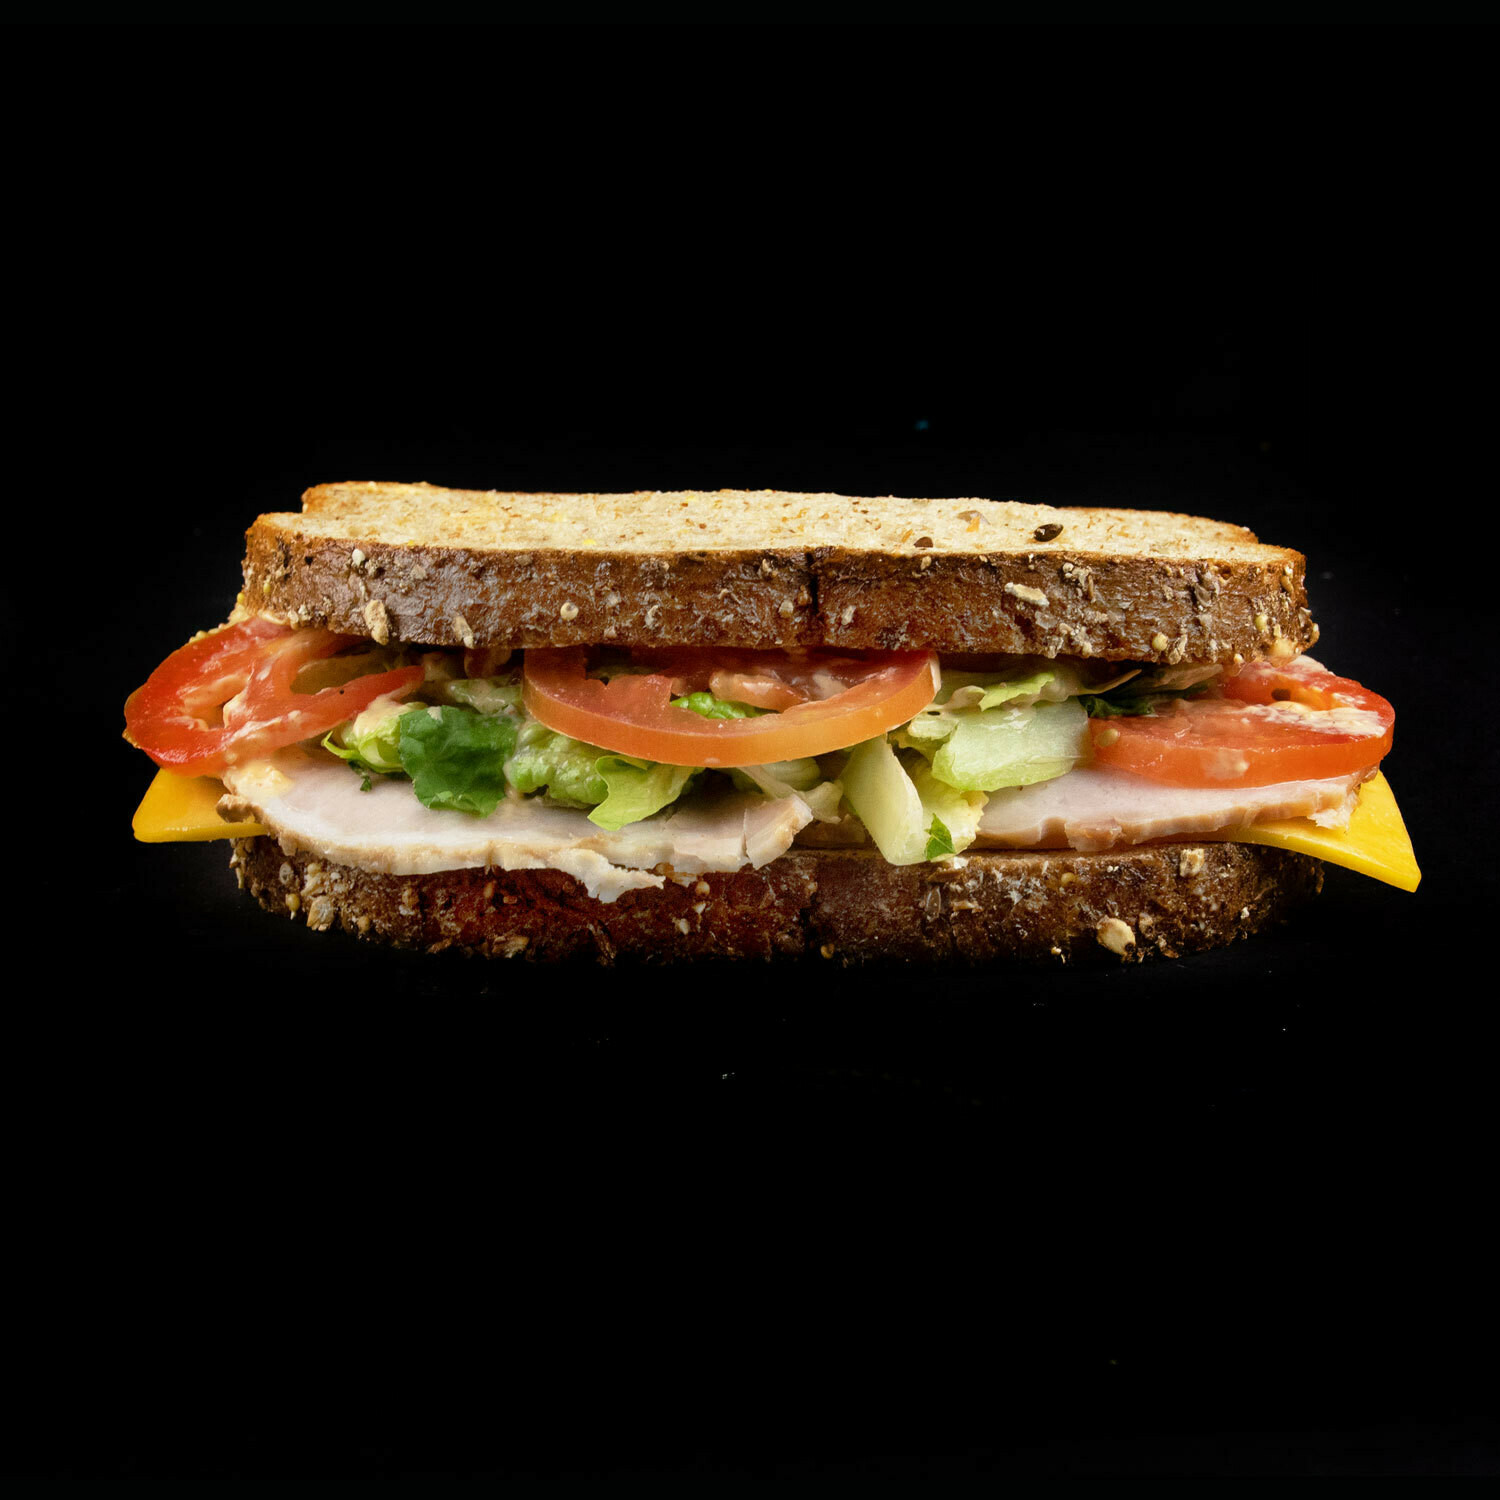 The Heirloom Sandwich